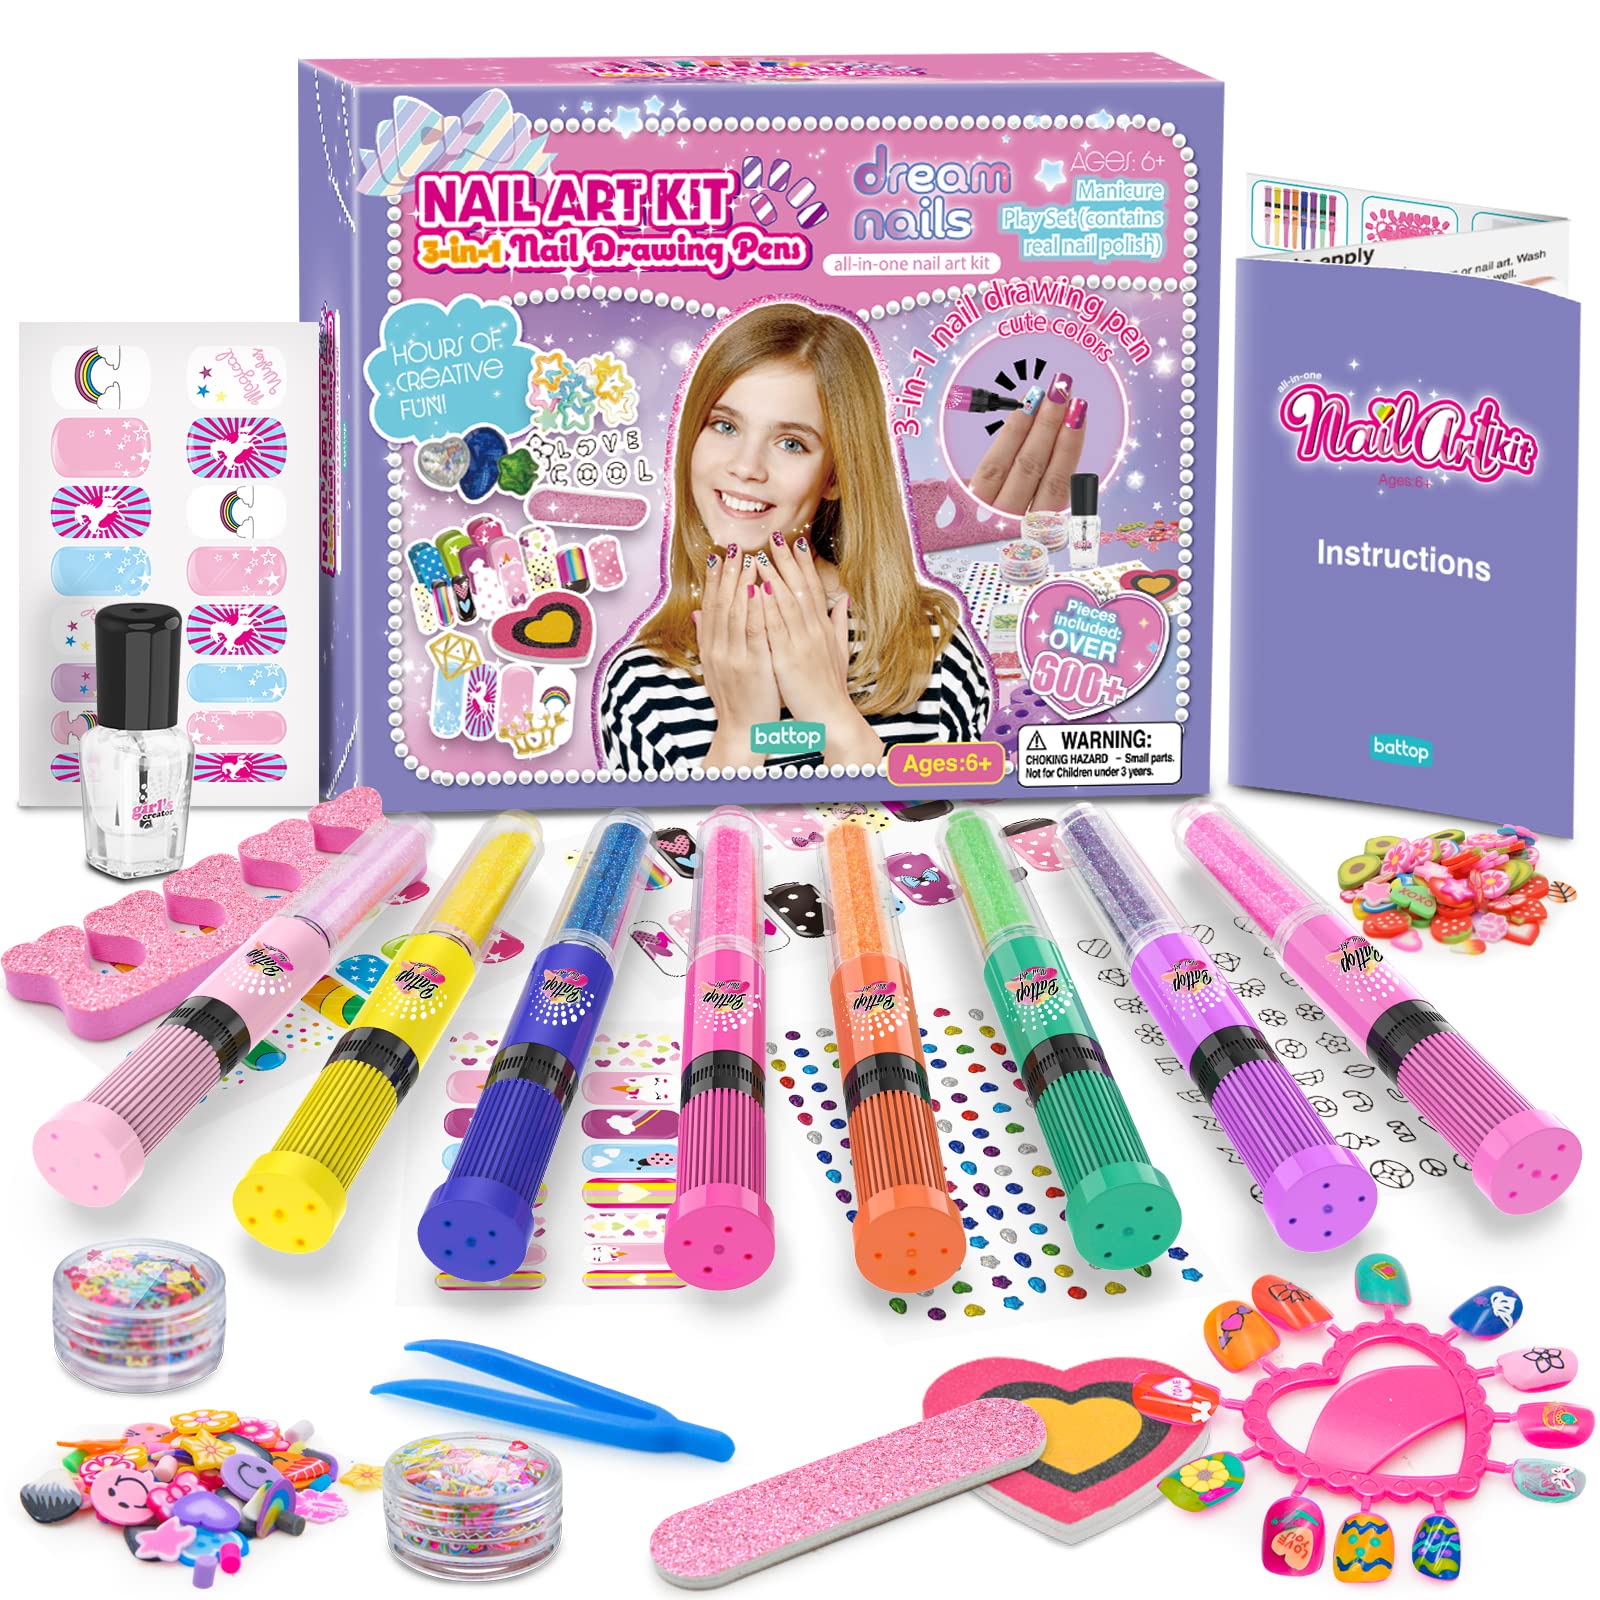 BATTOP Kids Nail Polish Set for Girls Nail Art Kit for Girls Ages 7-15 3